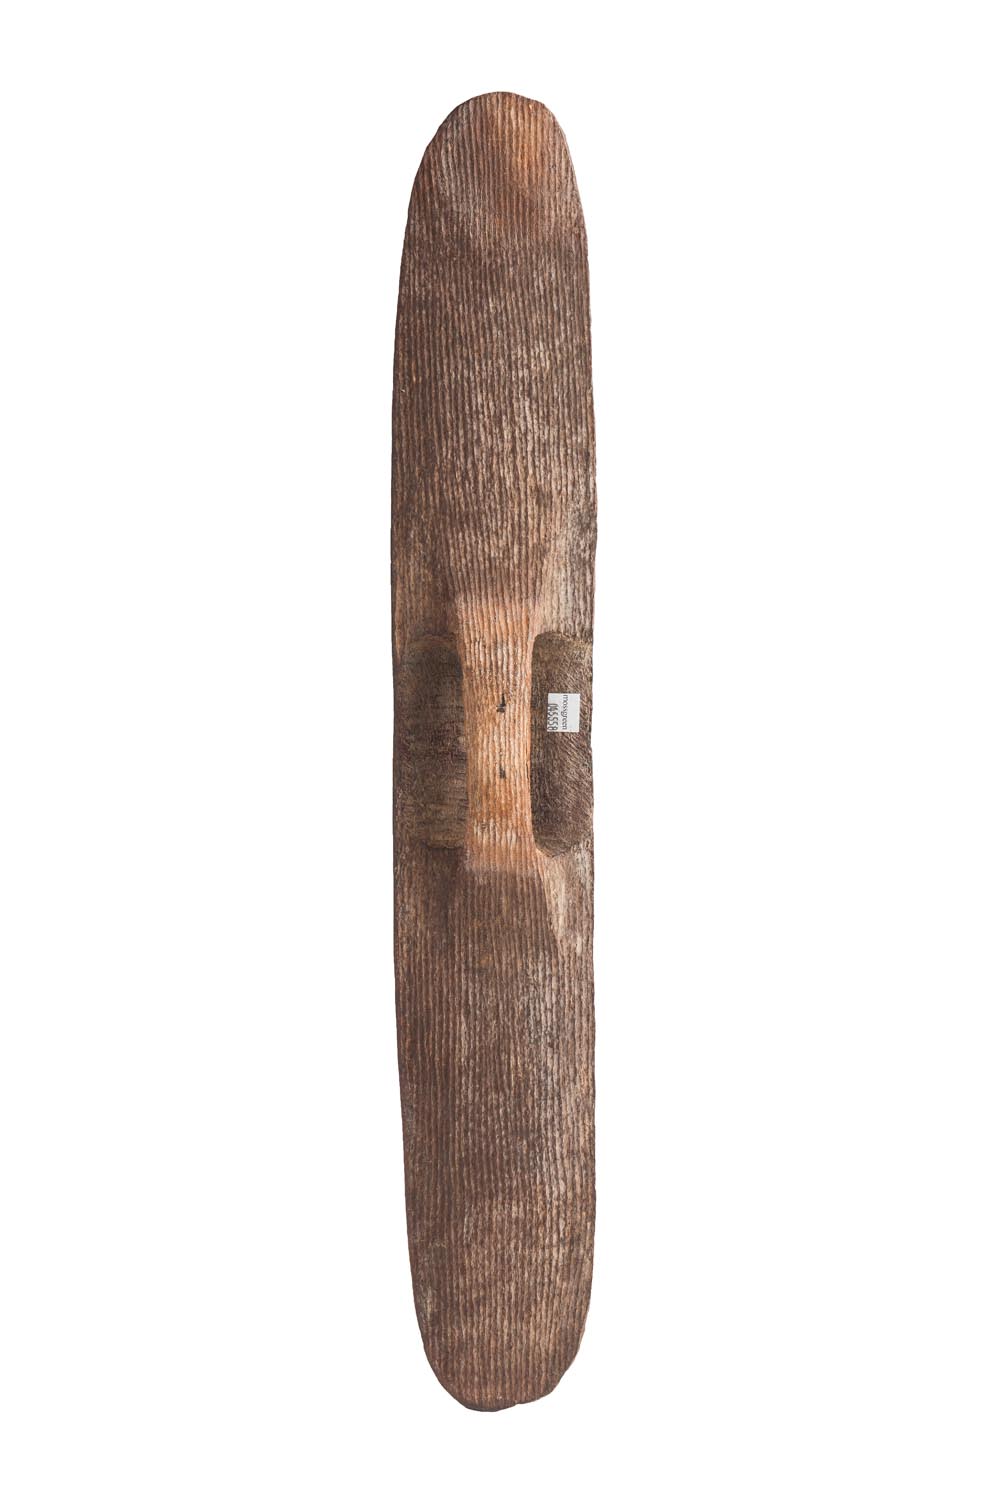 An Early Wunda Shield Western Australia (nineteenth century) carved wood 67.5cm high  PROVENANCE - Image 2 of 2